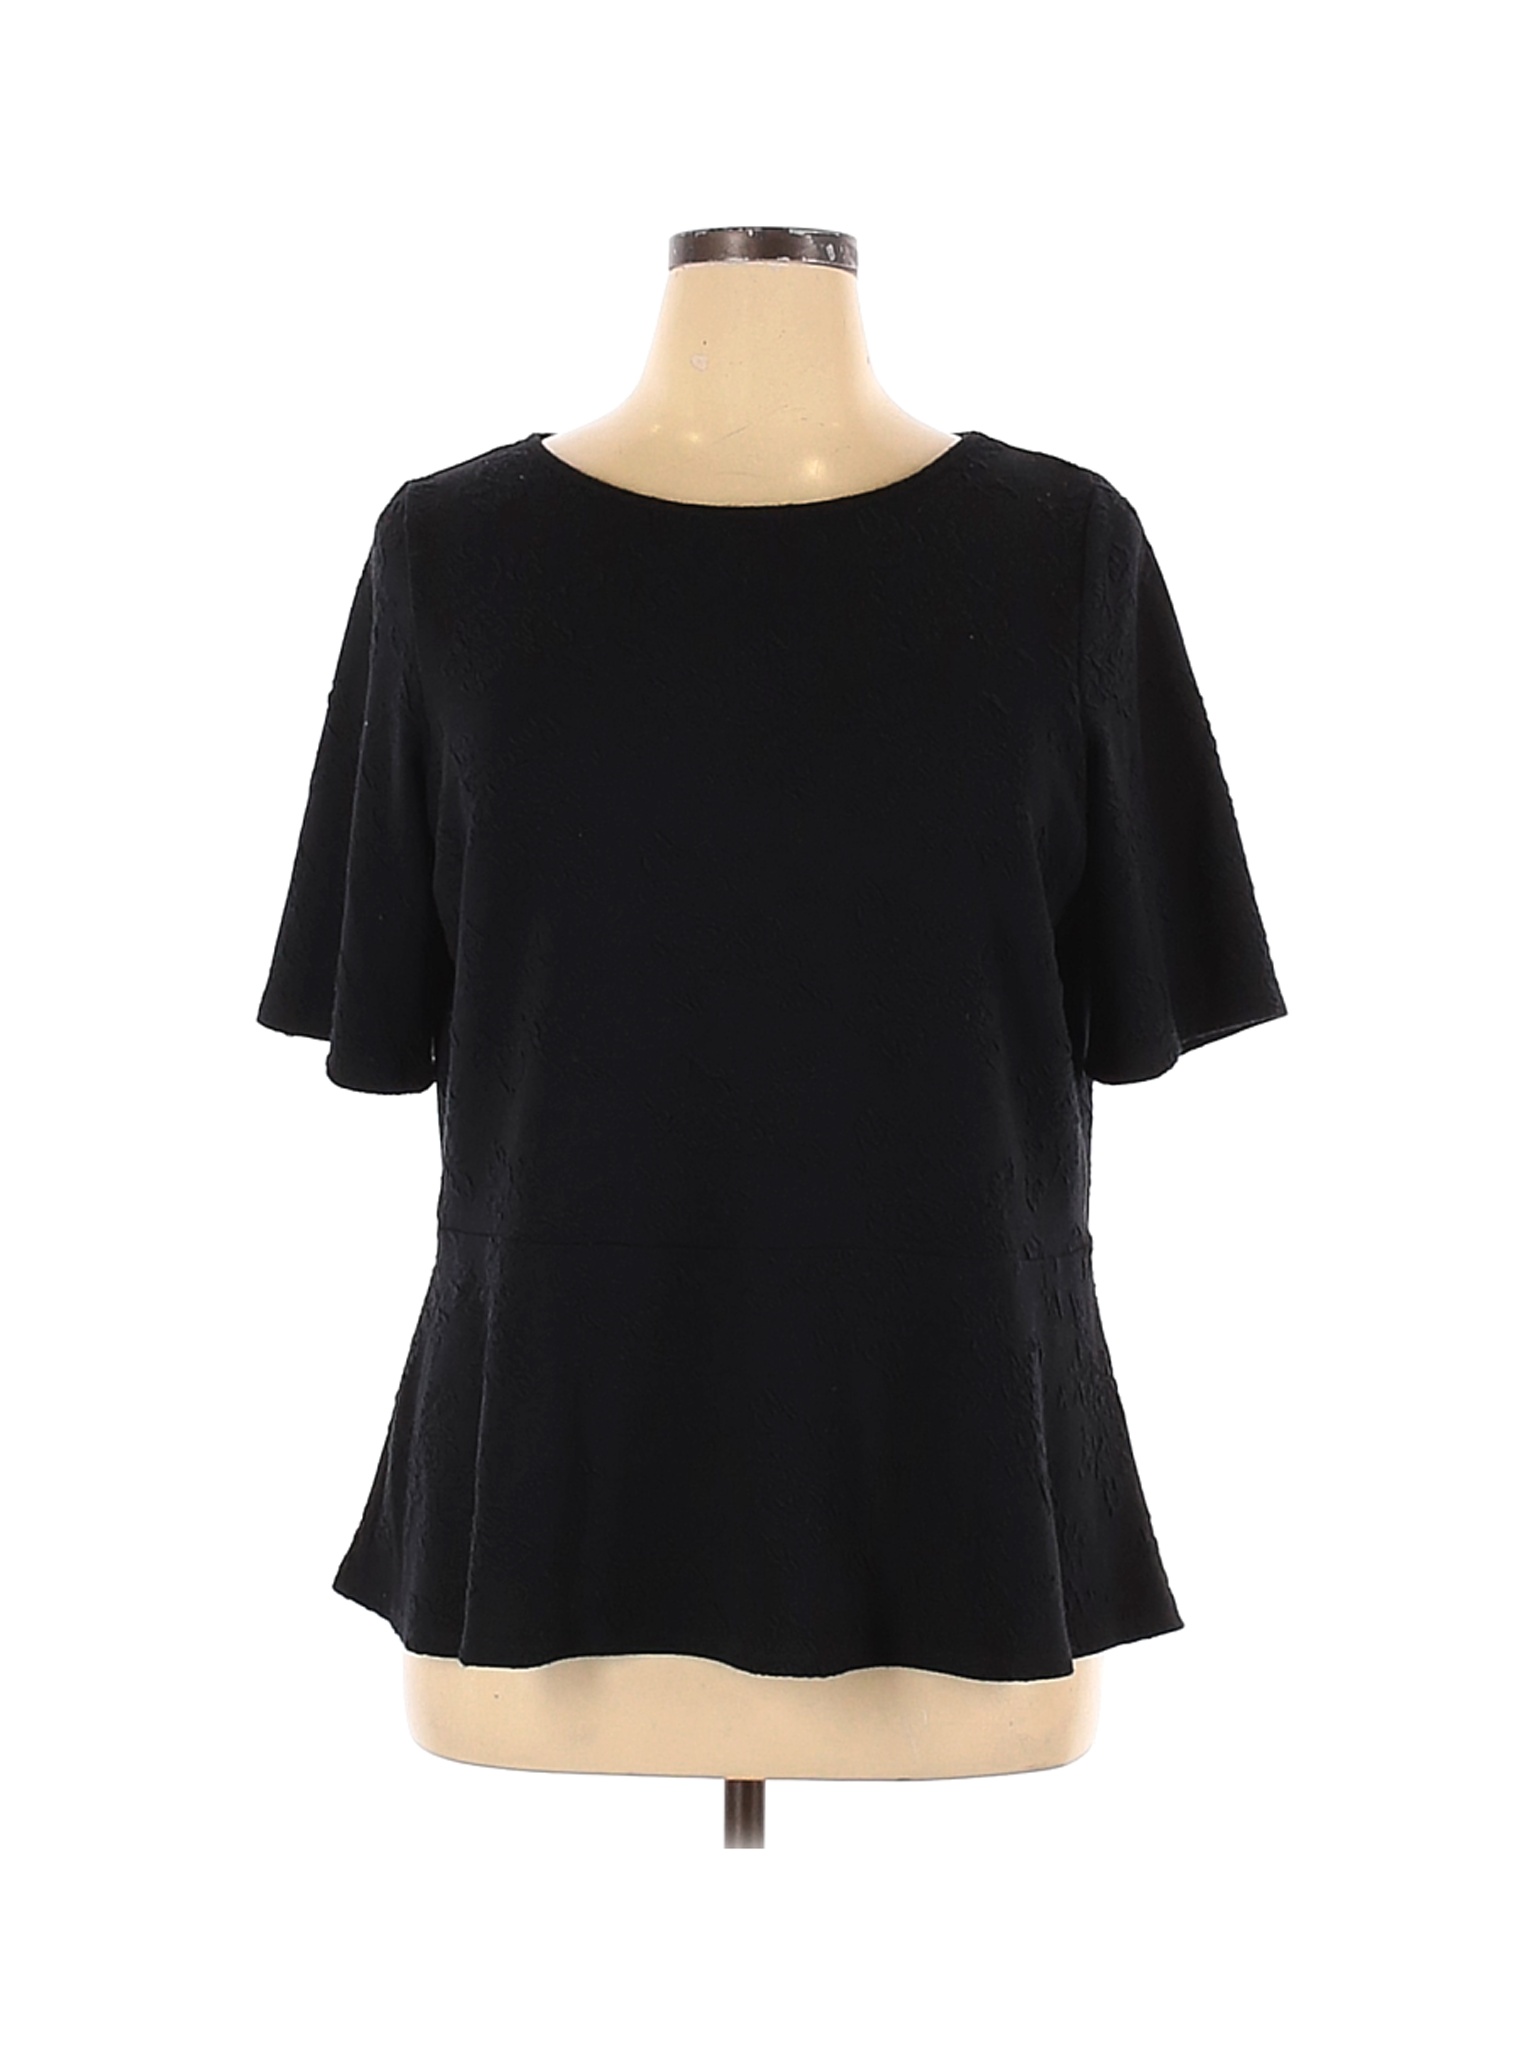 M&S Women Black Short Sleeve Top 20 uk | eBay